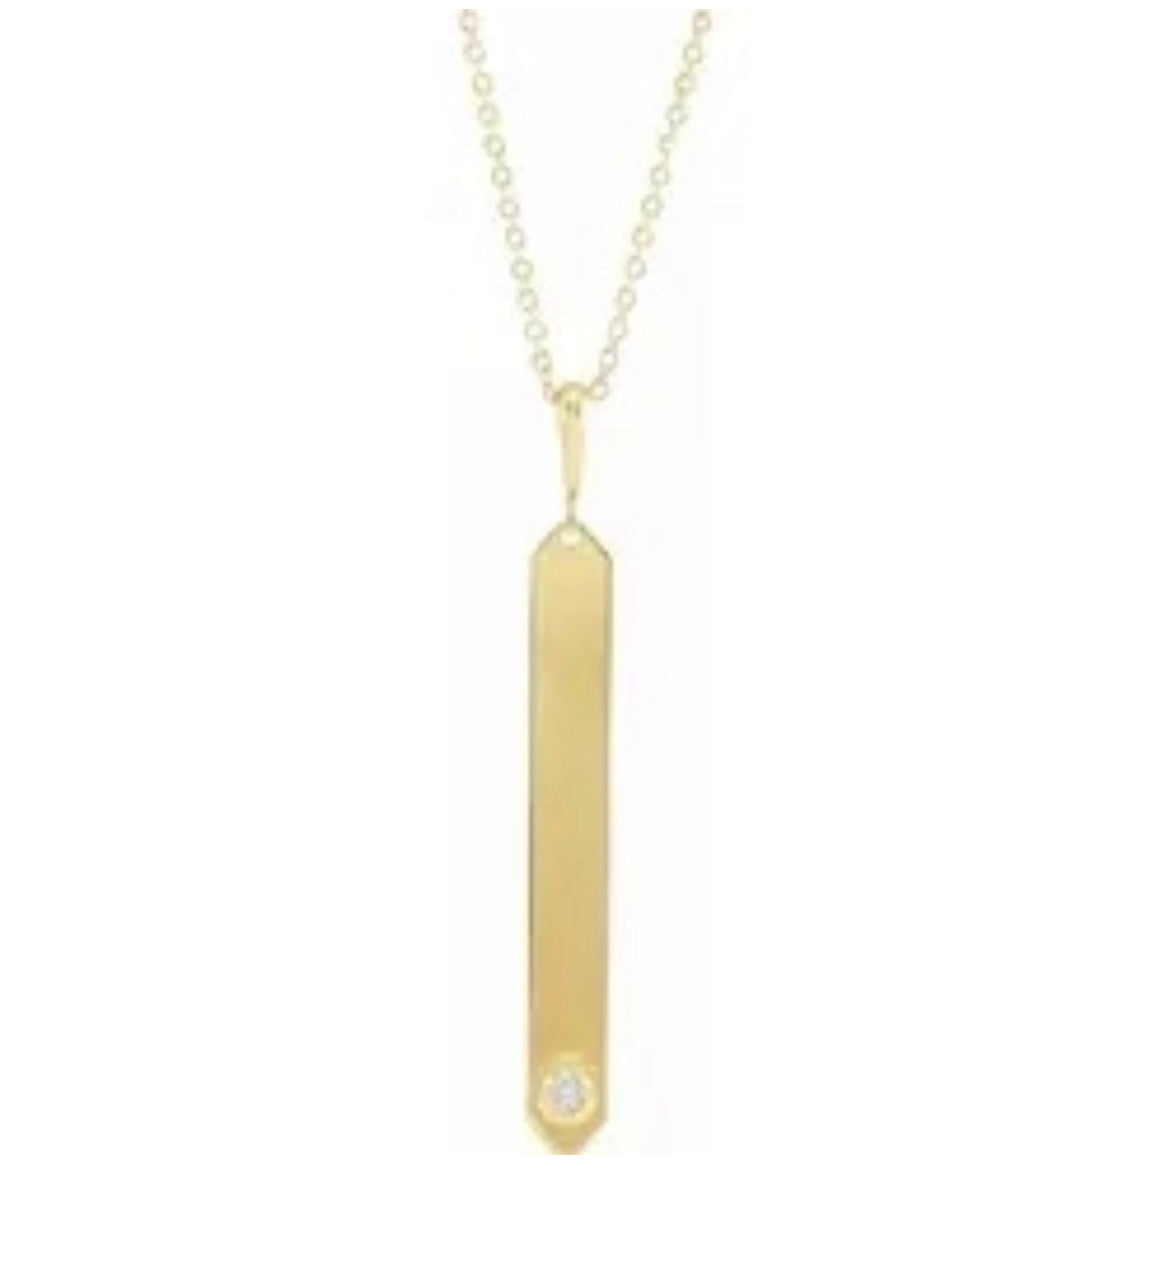 Gold diamond engravable bar necklace